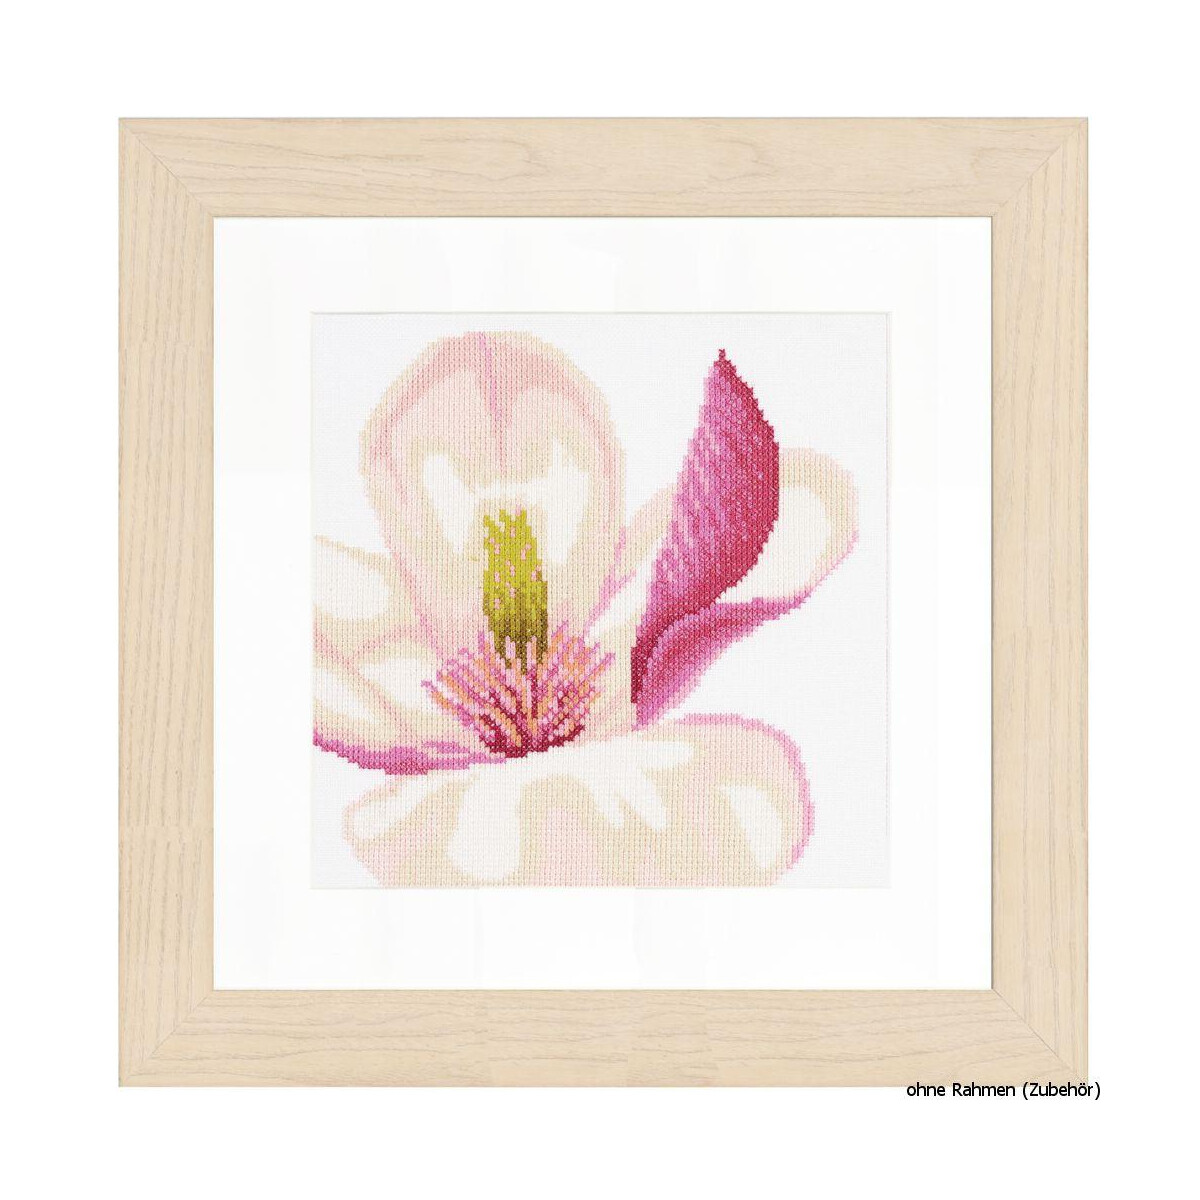 Lanarte cross stitch kit "magnolia flower II",...